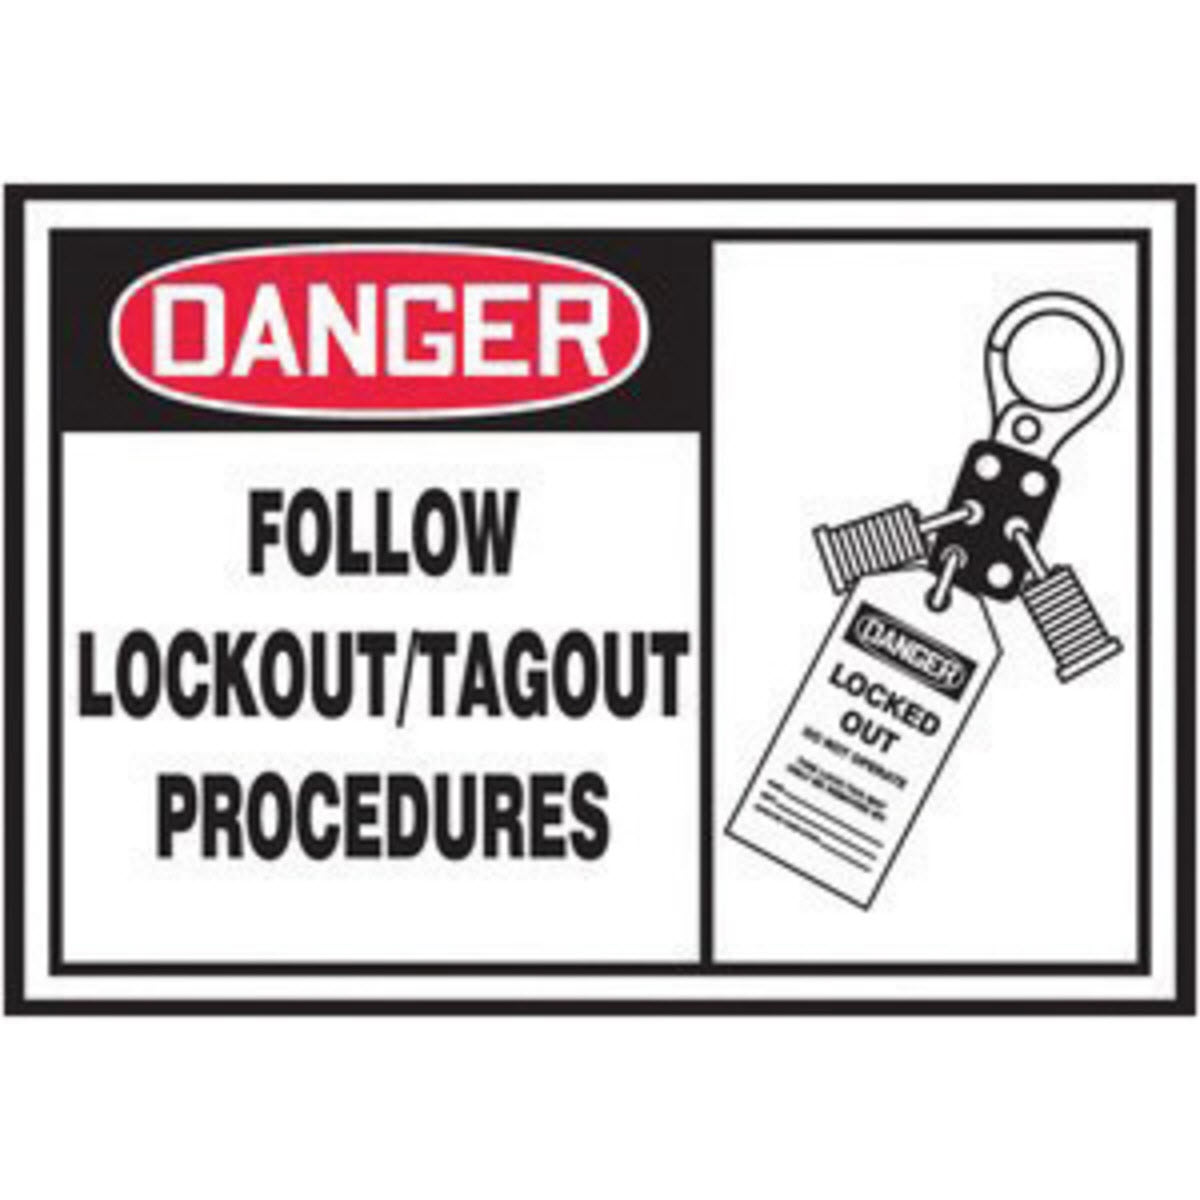 ACCUFORM LLKT003VSP DANGER FOLLOW LOCKOUT/TAGOUT PROCEDURES Lockout Graphic Adhesive Vinyl Lockout/Tagout Labels: Package of 5